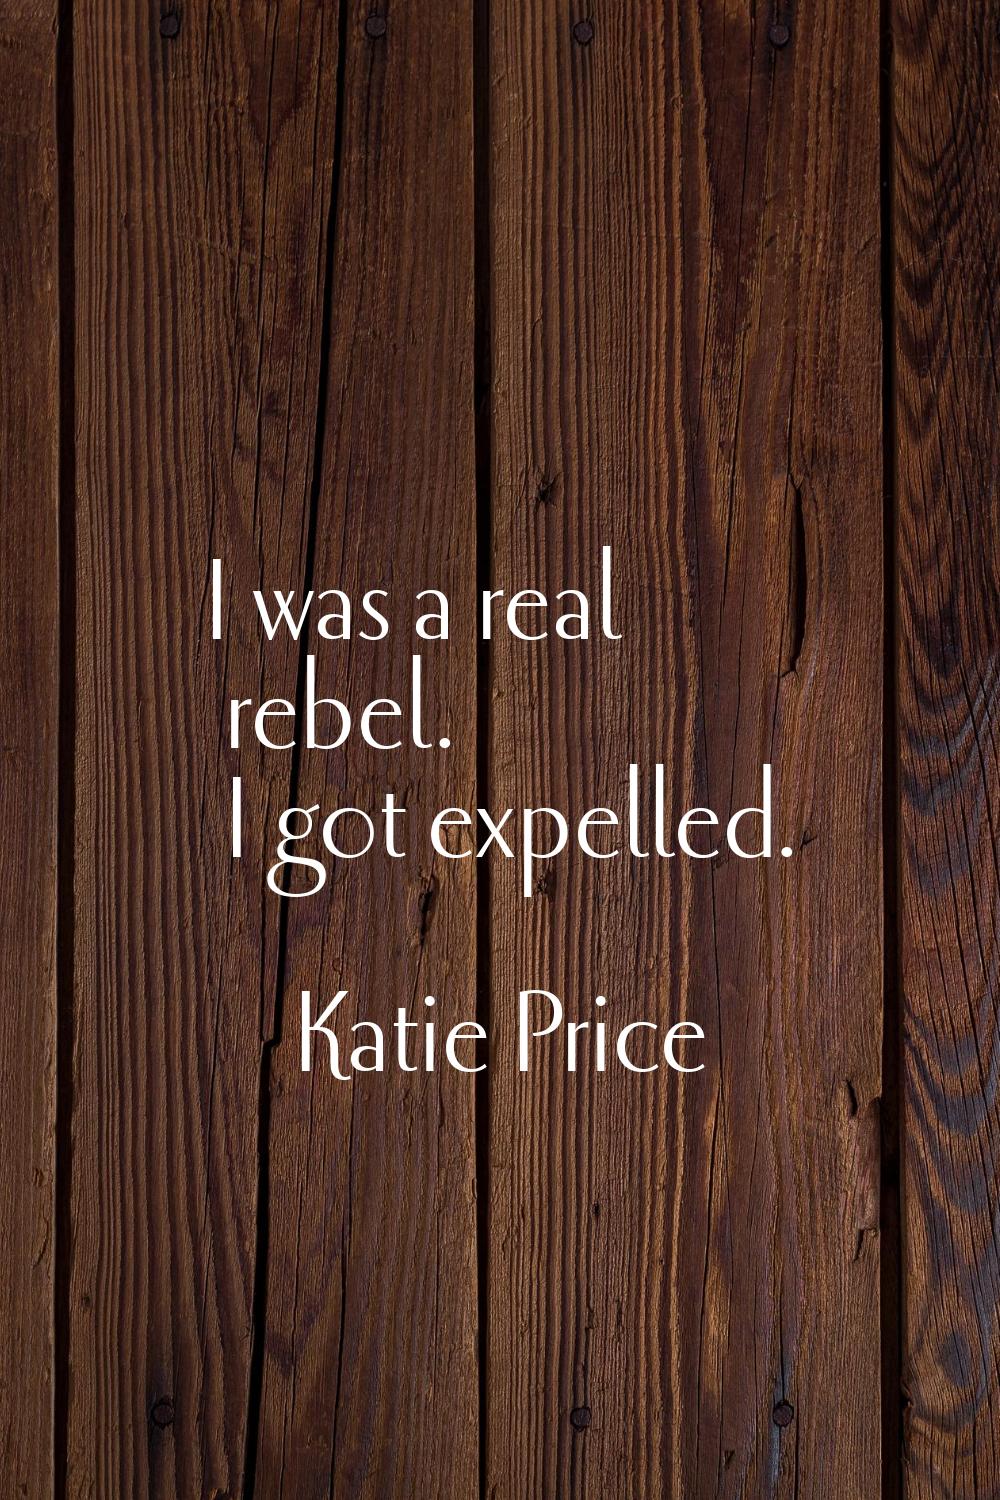 I was a real rebel. I got expelled.